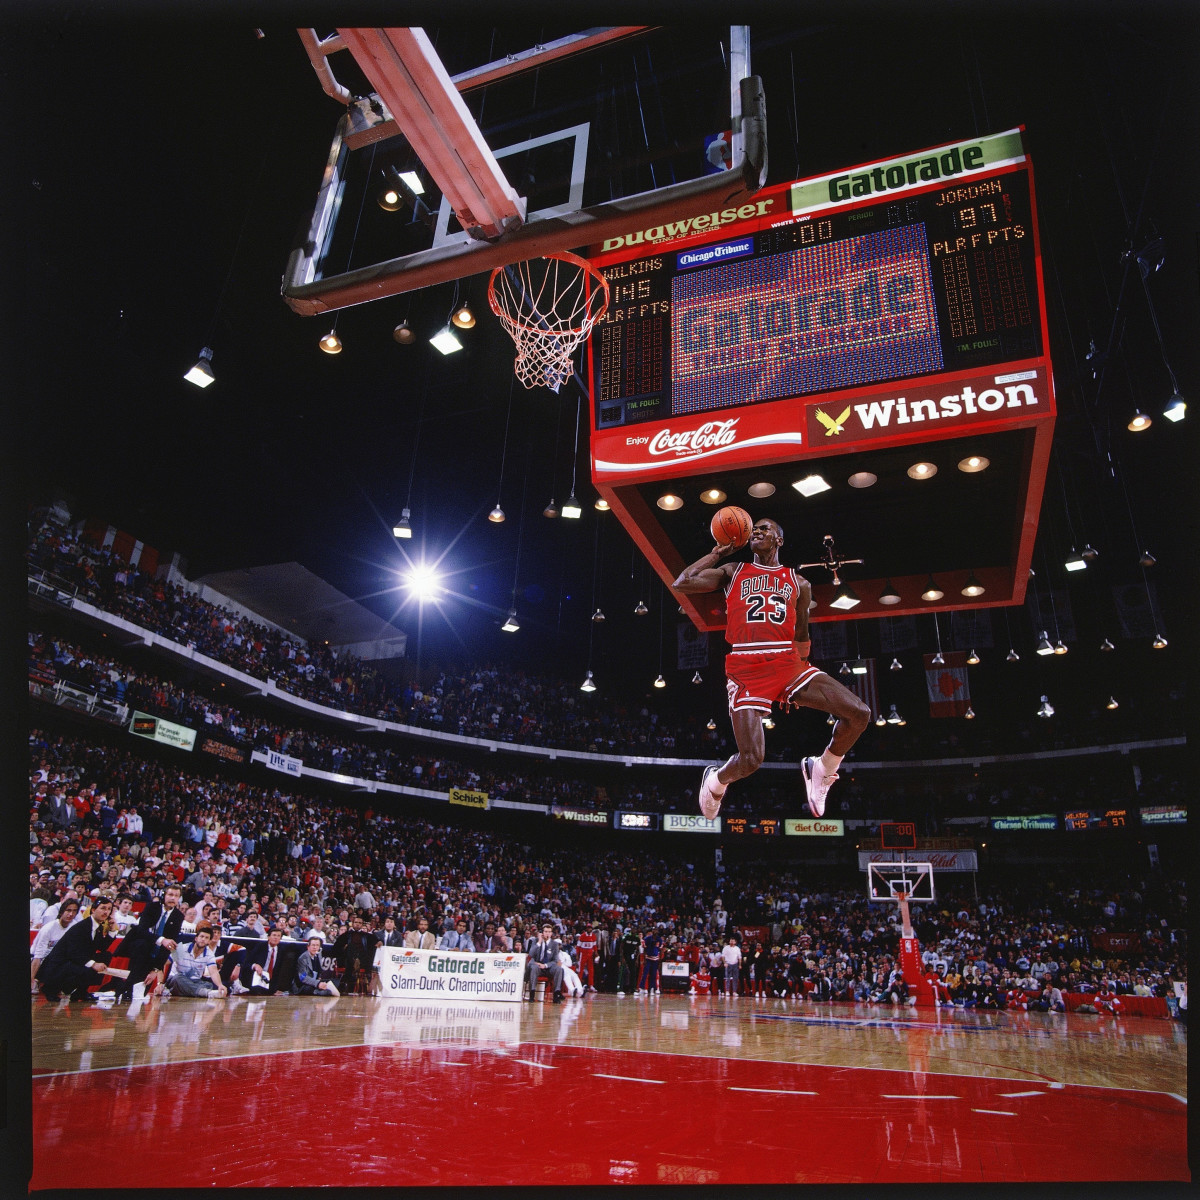 In 1997 a group of Duke students stole Michael Jordan's UNC jersey